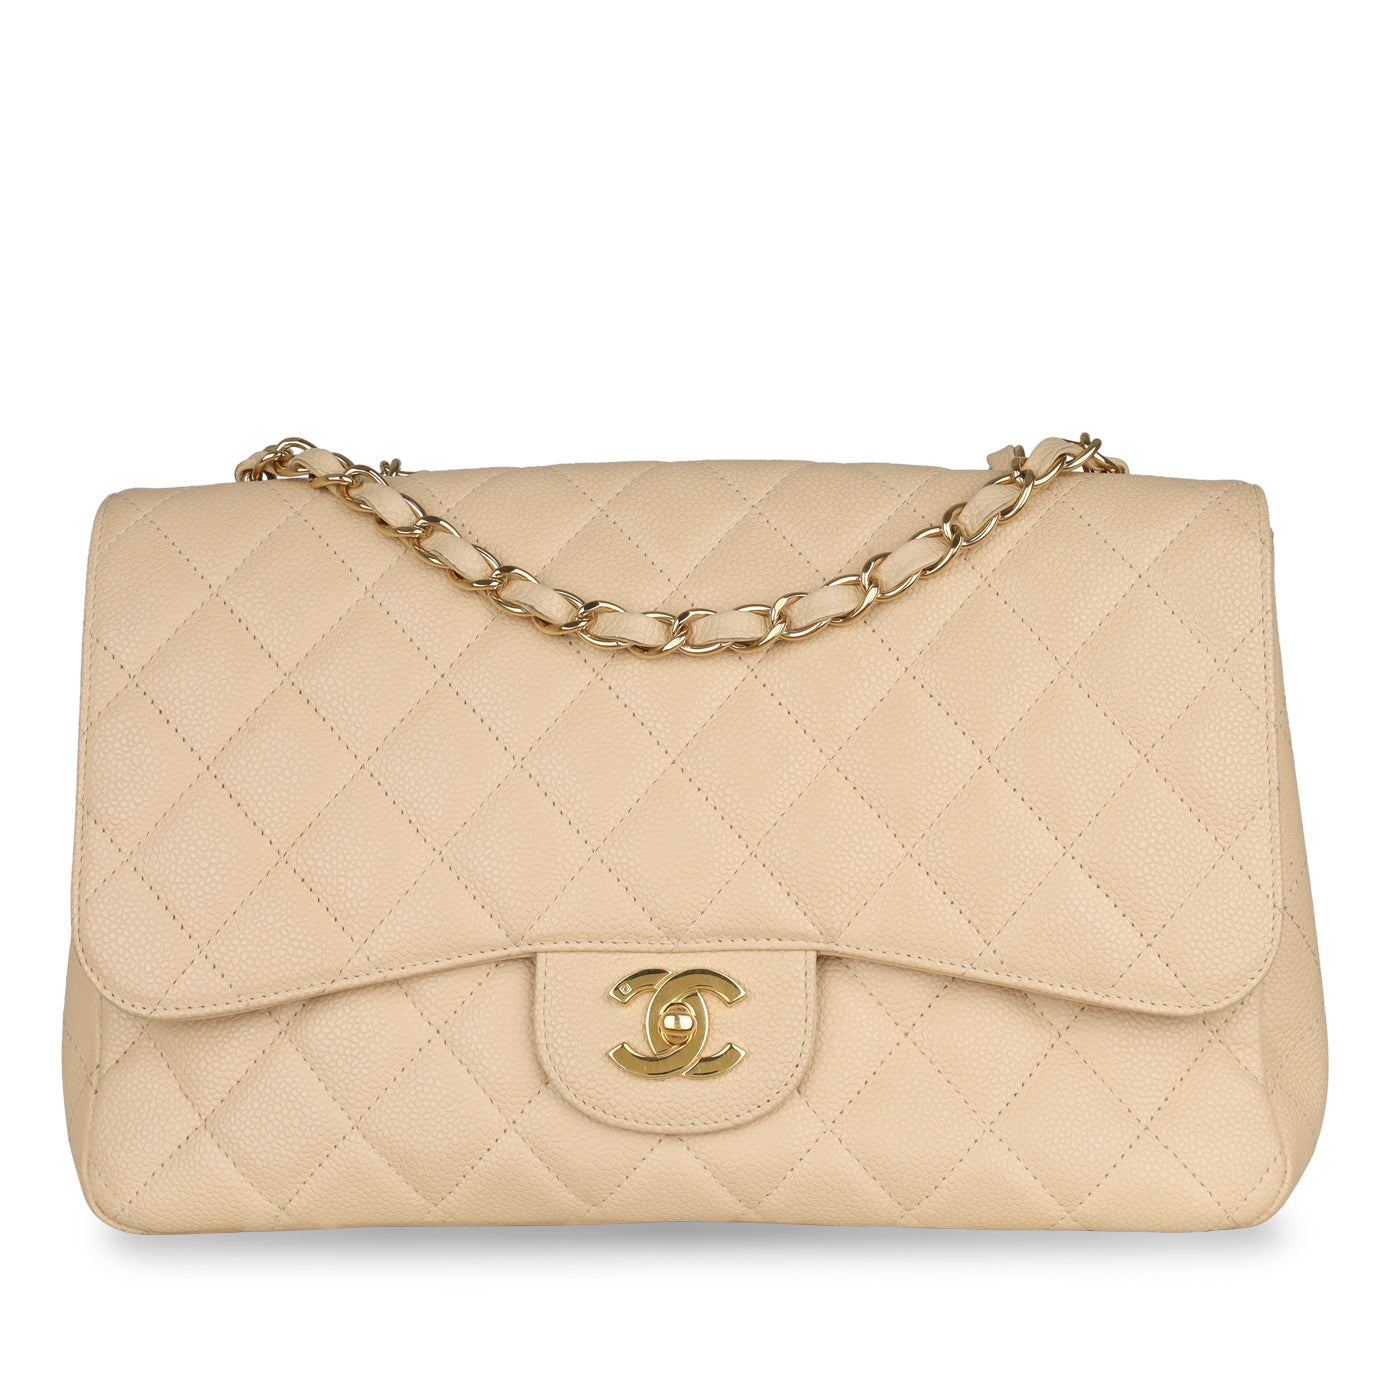 Chanel - Classic Flap Bag Jumbo - Beige Caviar Leather - Pre